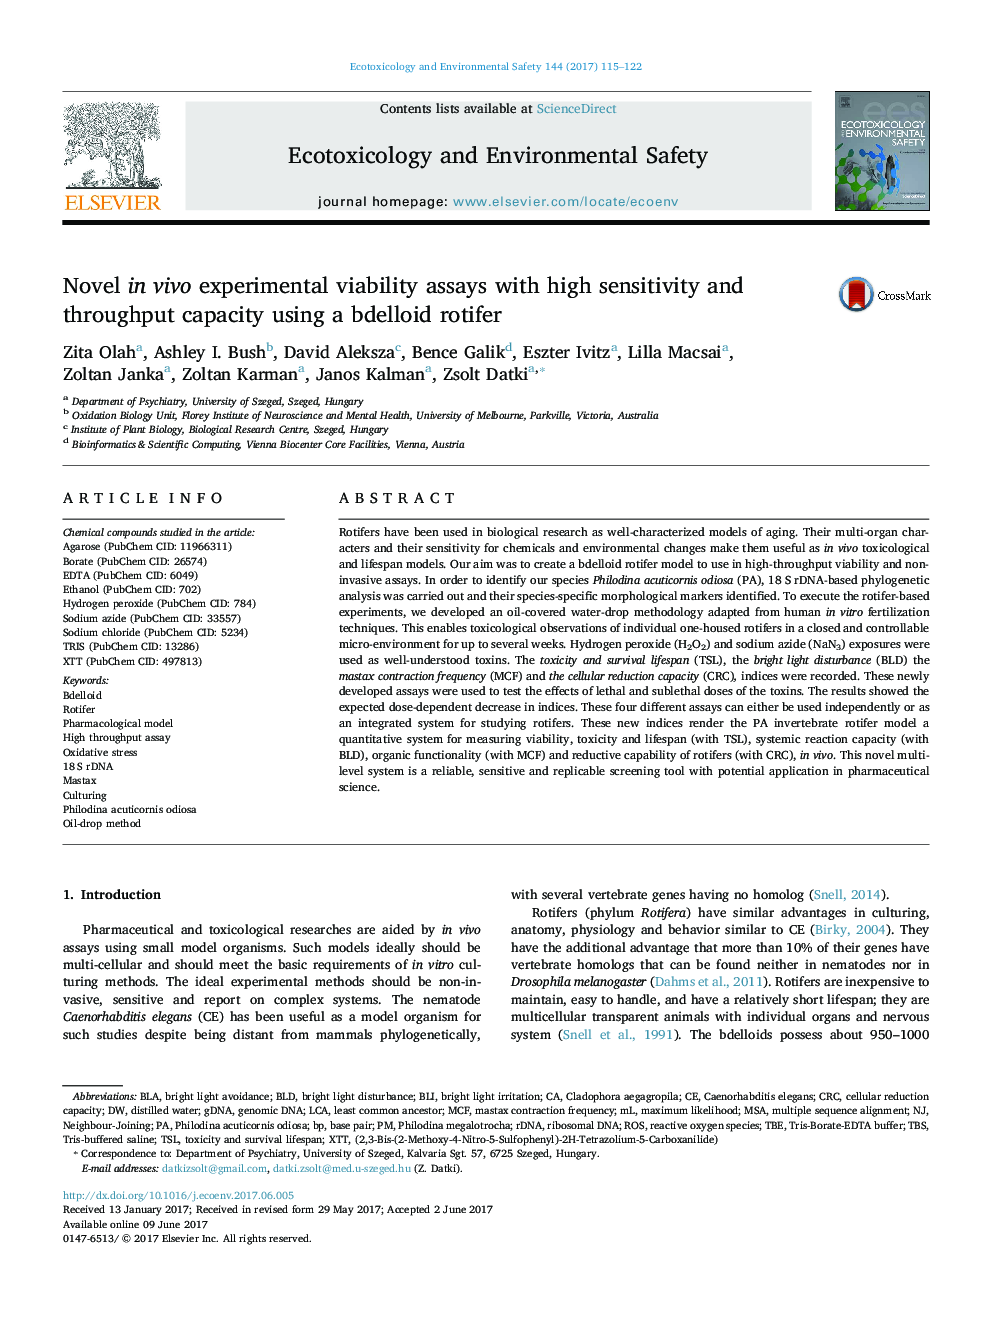 Novel in vivo experimental viability assays with high sensitivity and throughput capacity using a bdelloid rotifer